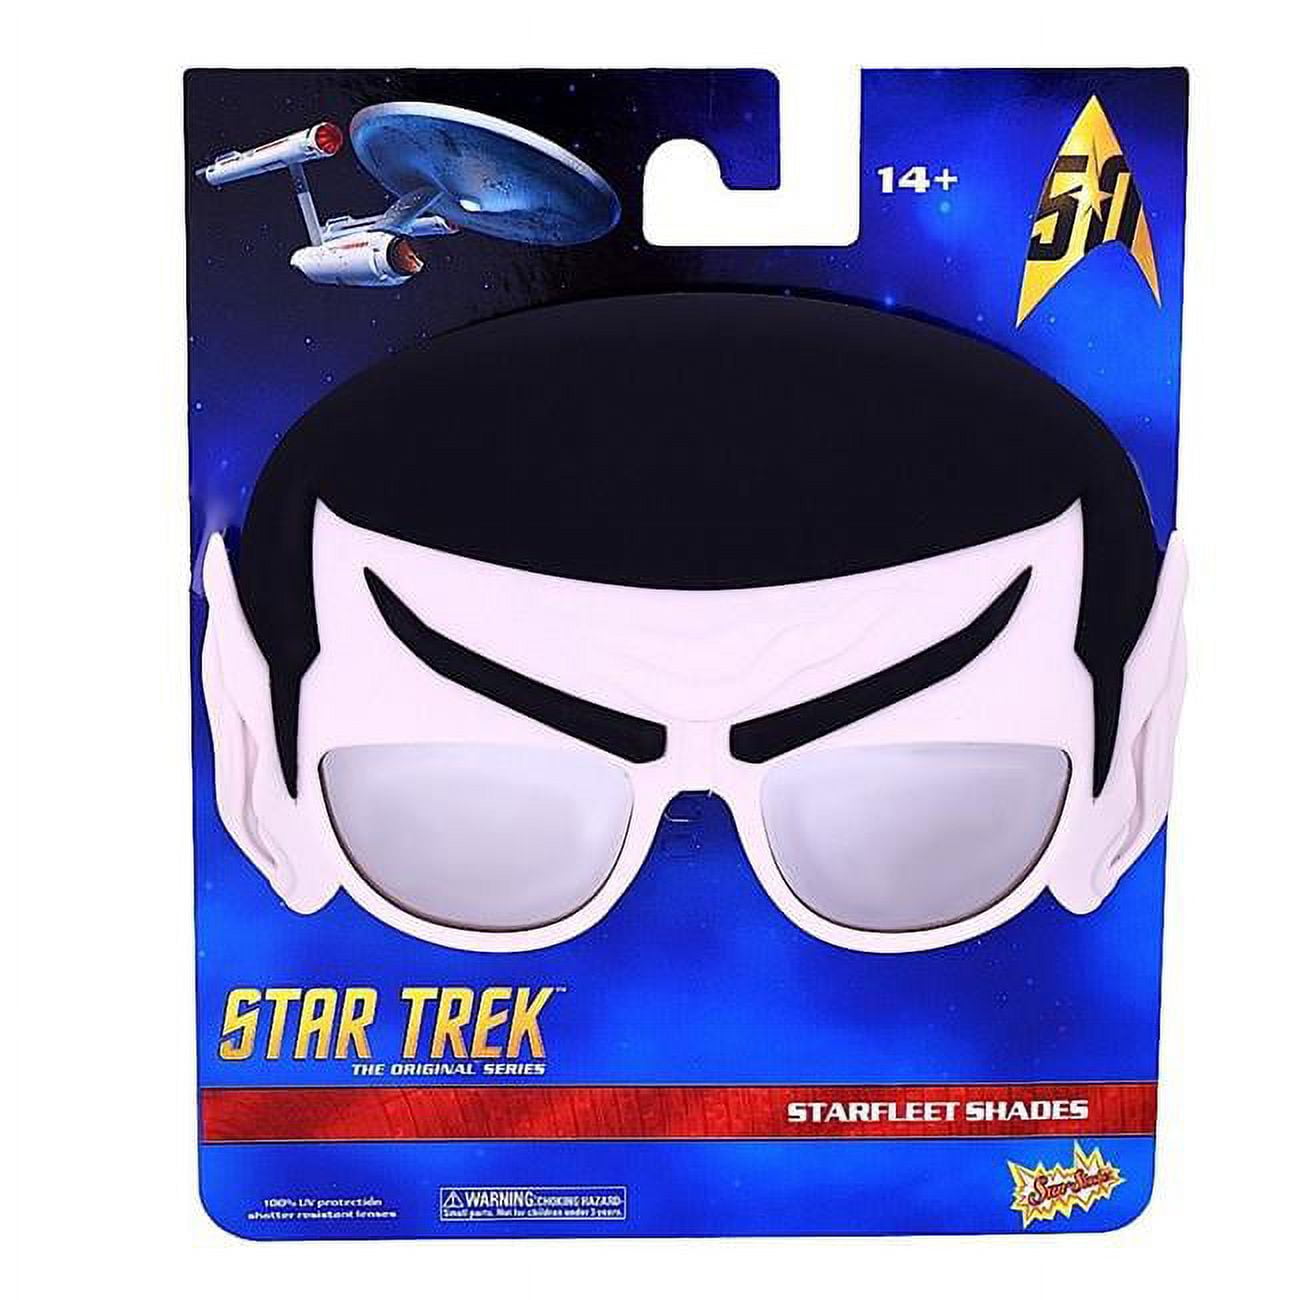 Picture of Sunstaches SG2546 Star Trek Sunglasses